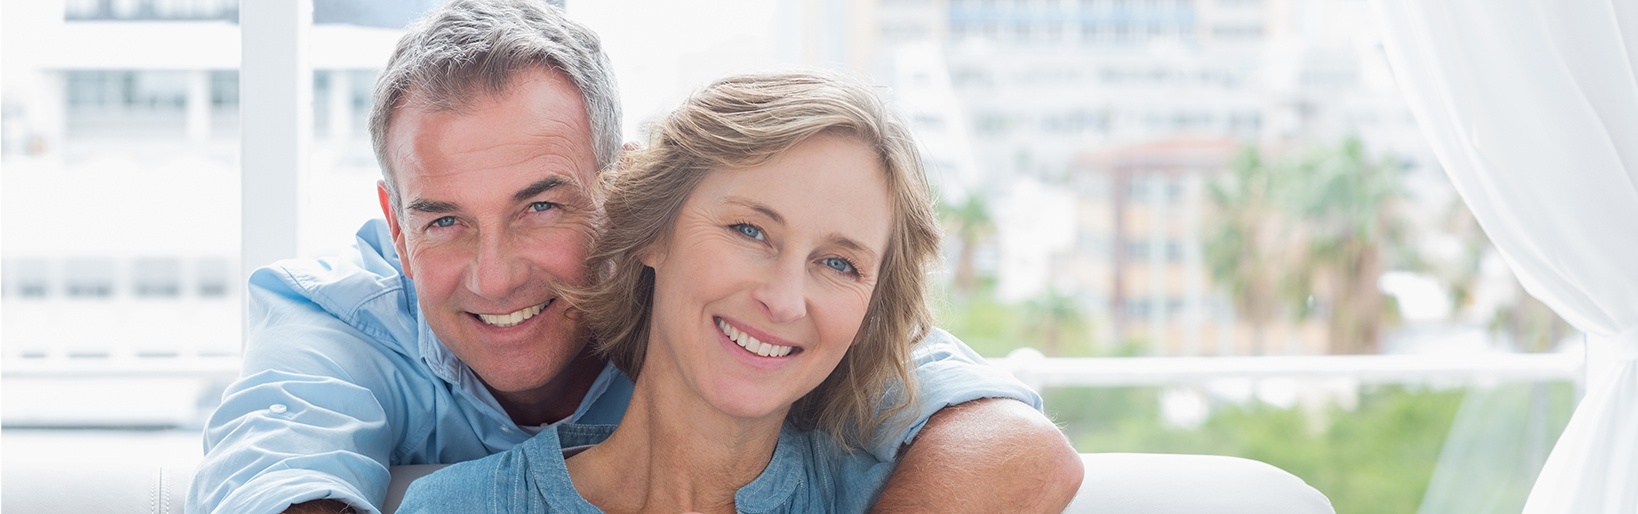 Men and women can trust their urologic health to HMU.